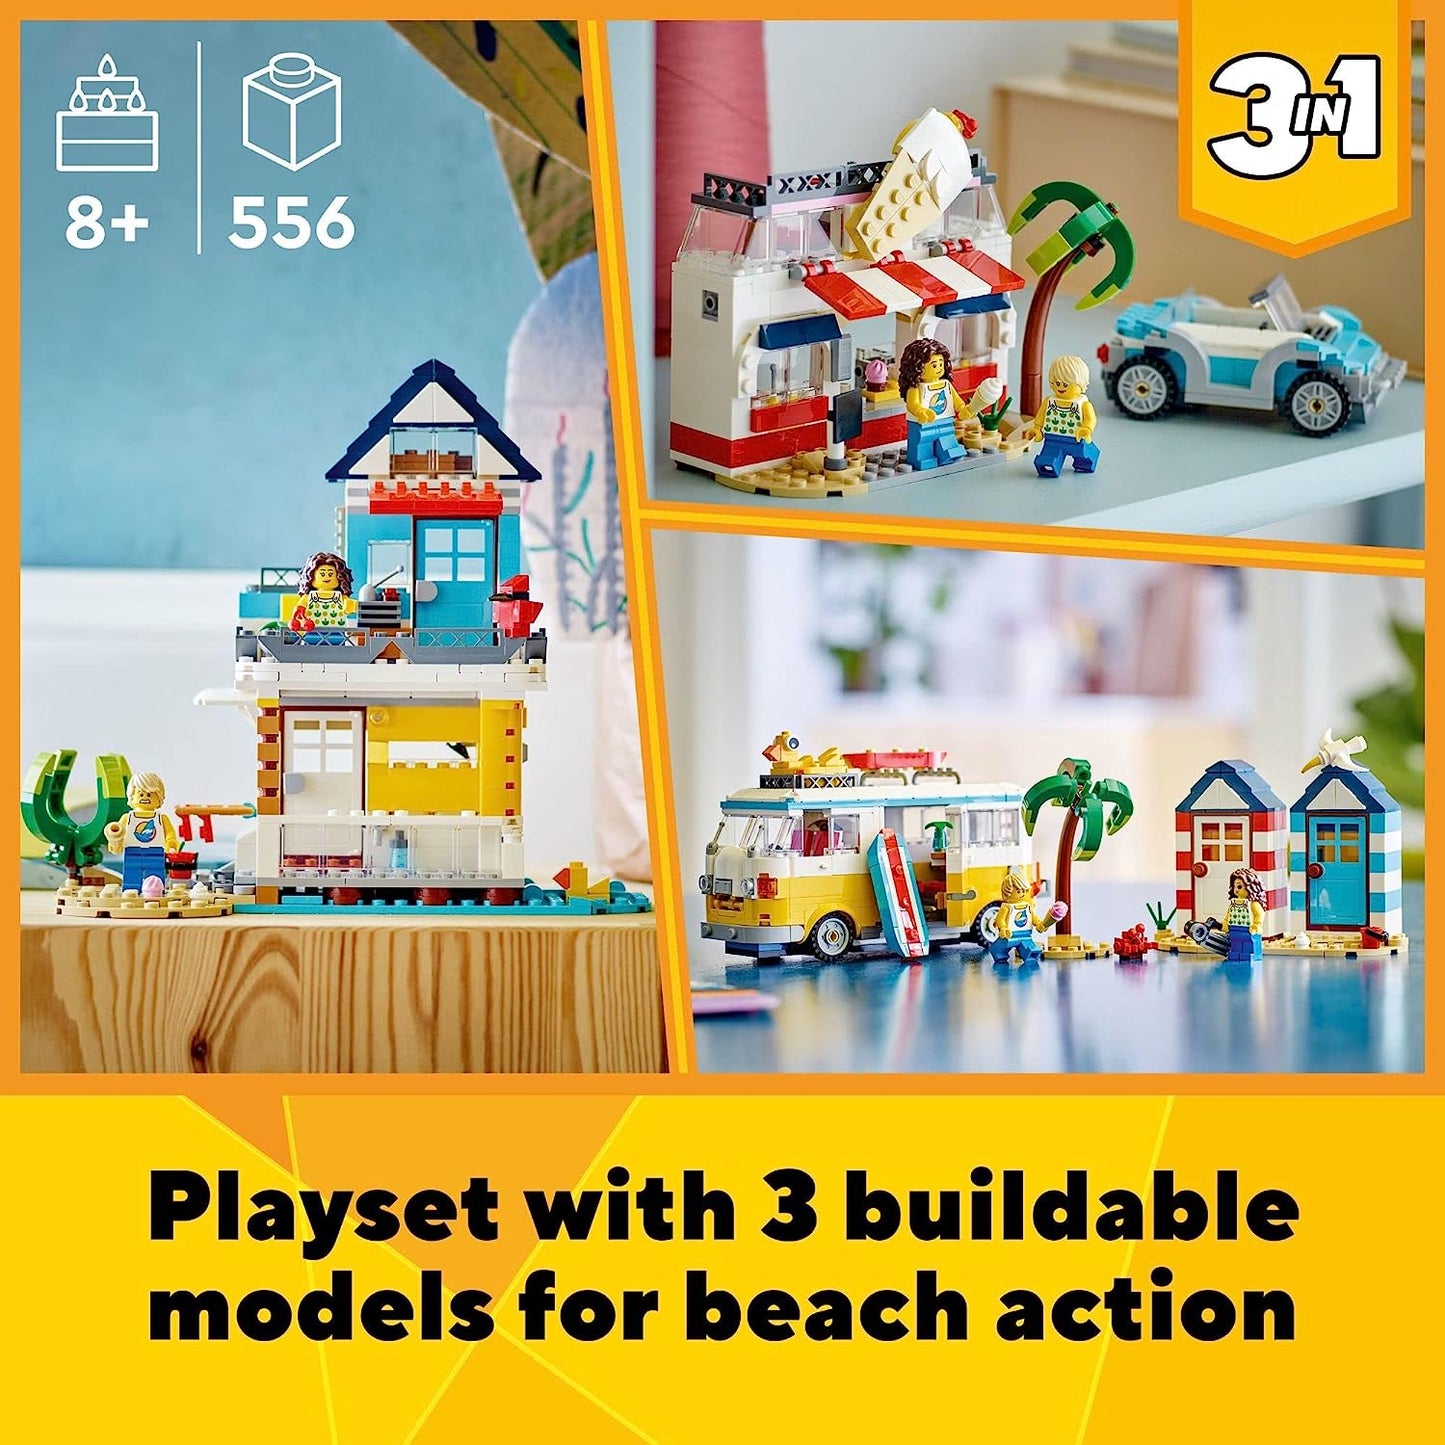 LEGO Creator - 3 in 1 Beach Camper Van Building 31138